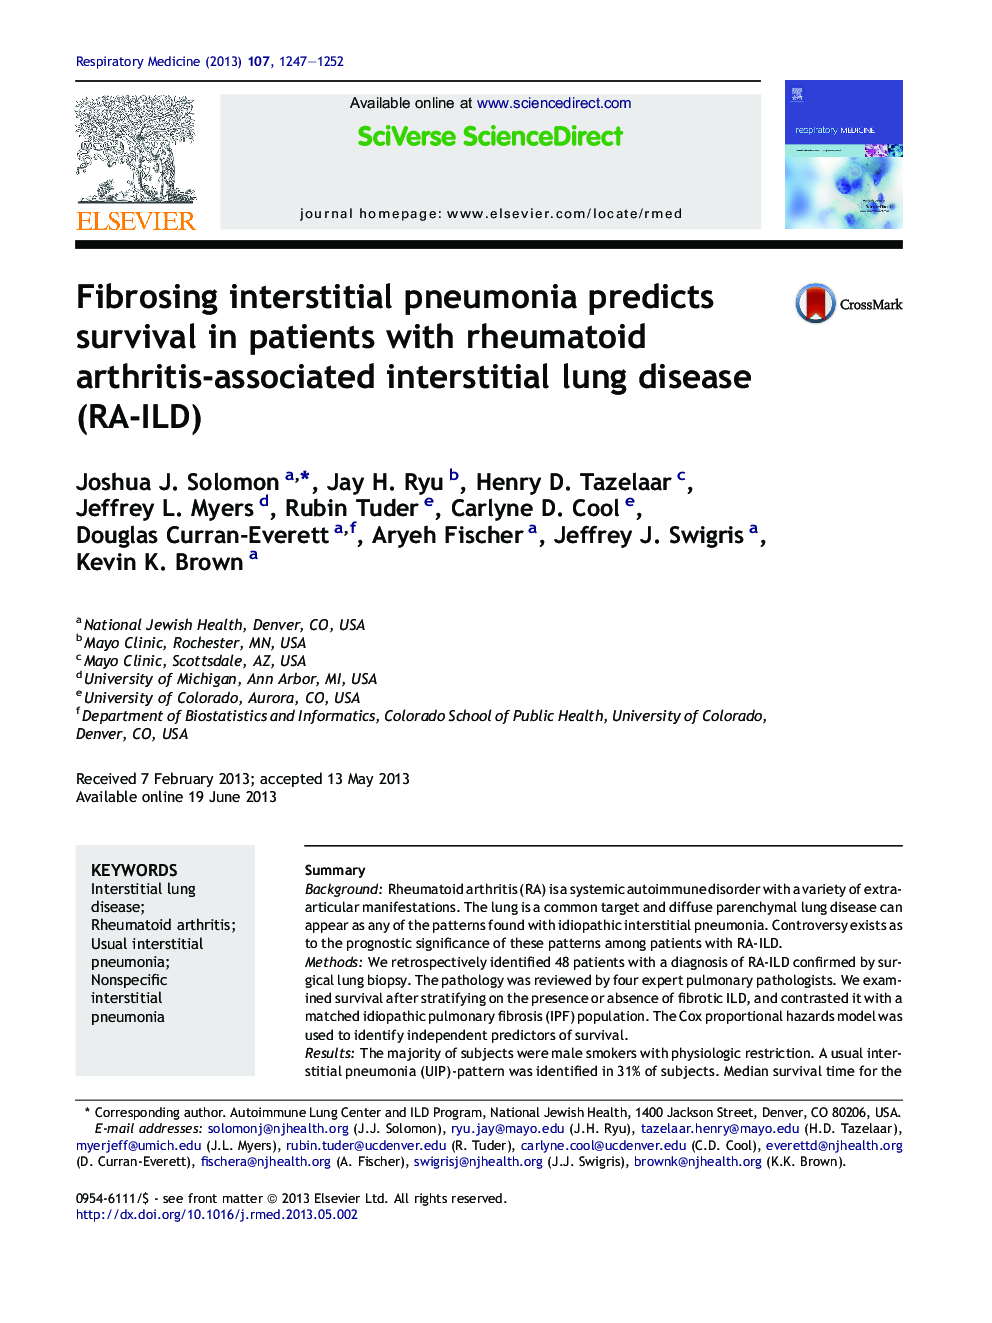 Fibrosing interstitial pneumonia predicts survival in patients with rheumatoid arthritis-associated interstitial lung disease (RA-ILD)